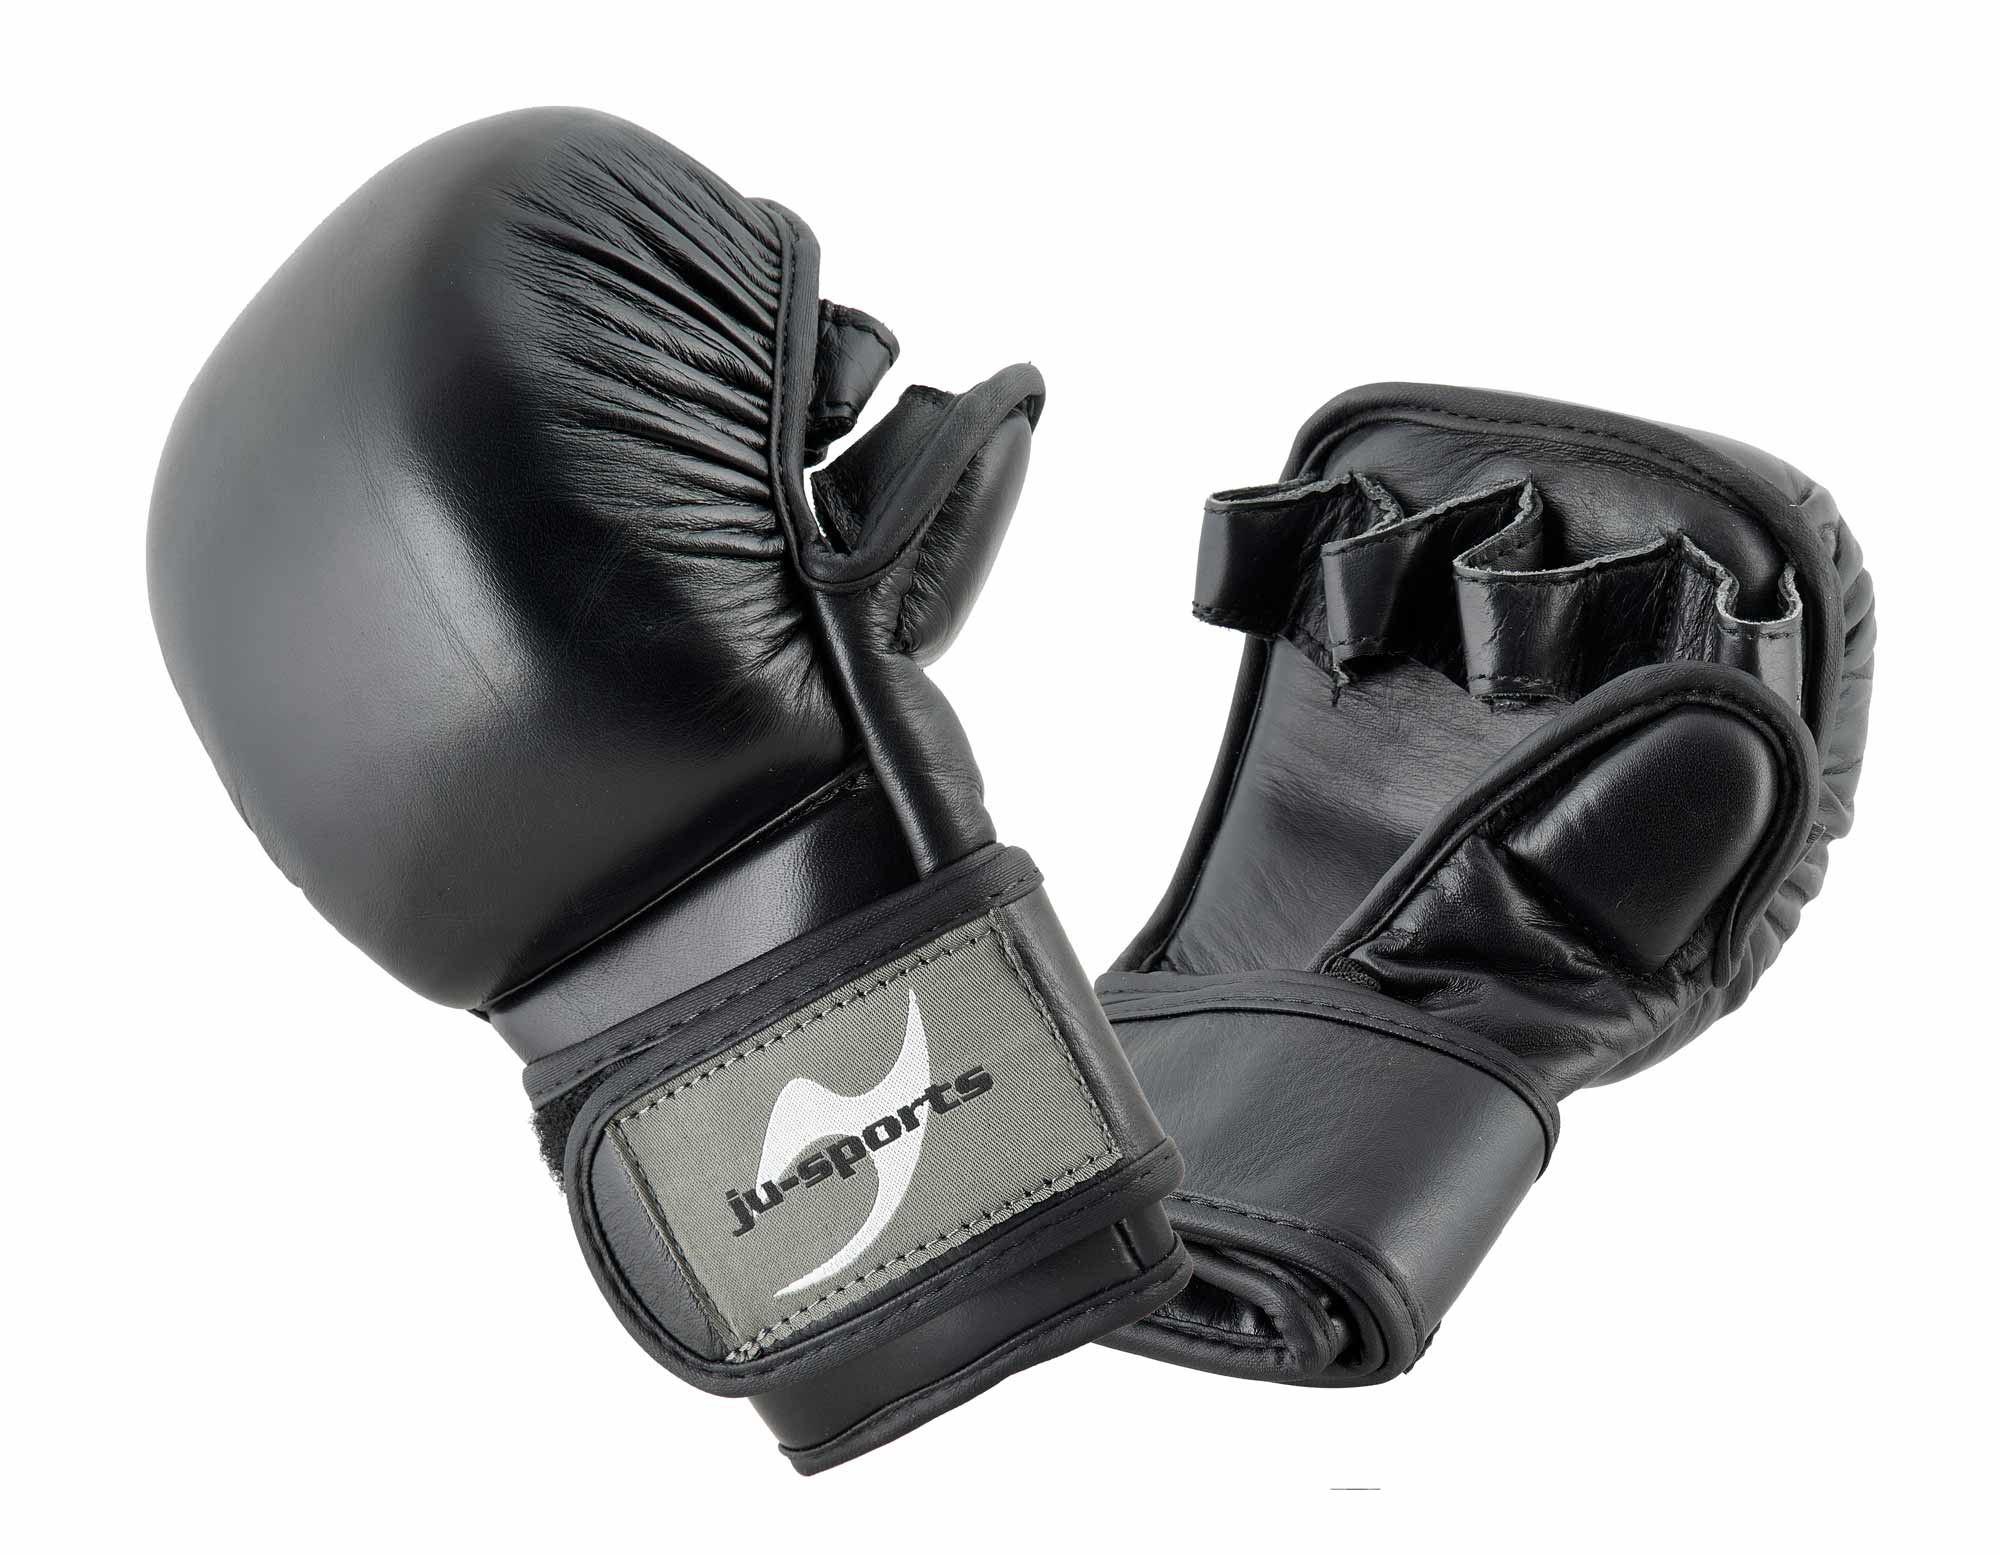 Abverkauf: Freefight Handschuh Sparring Leder